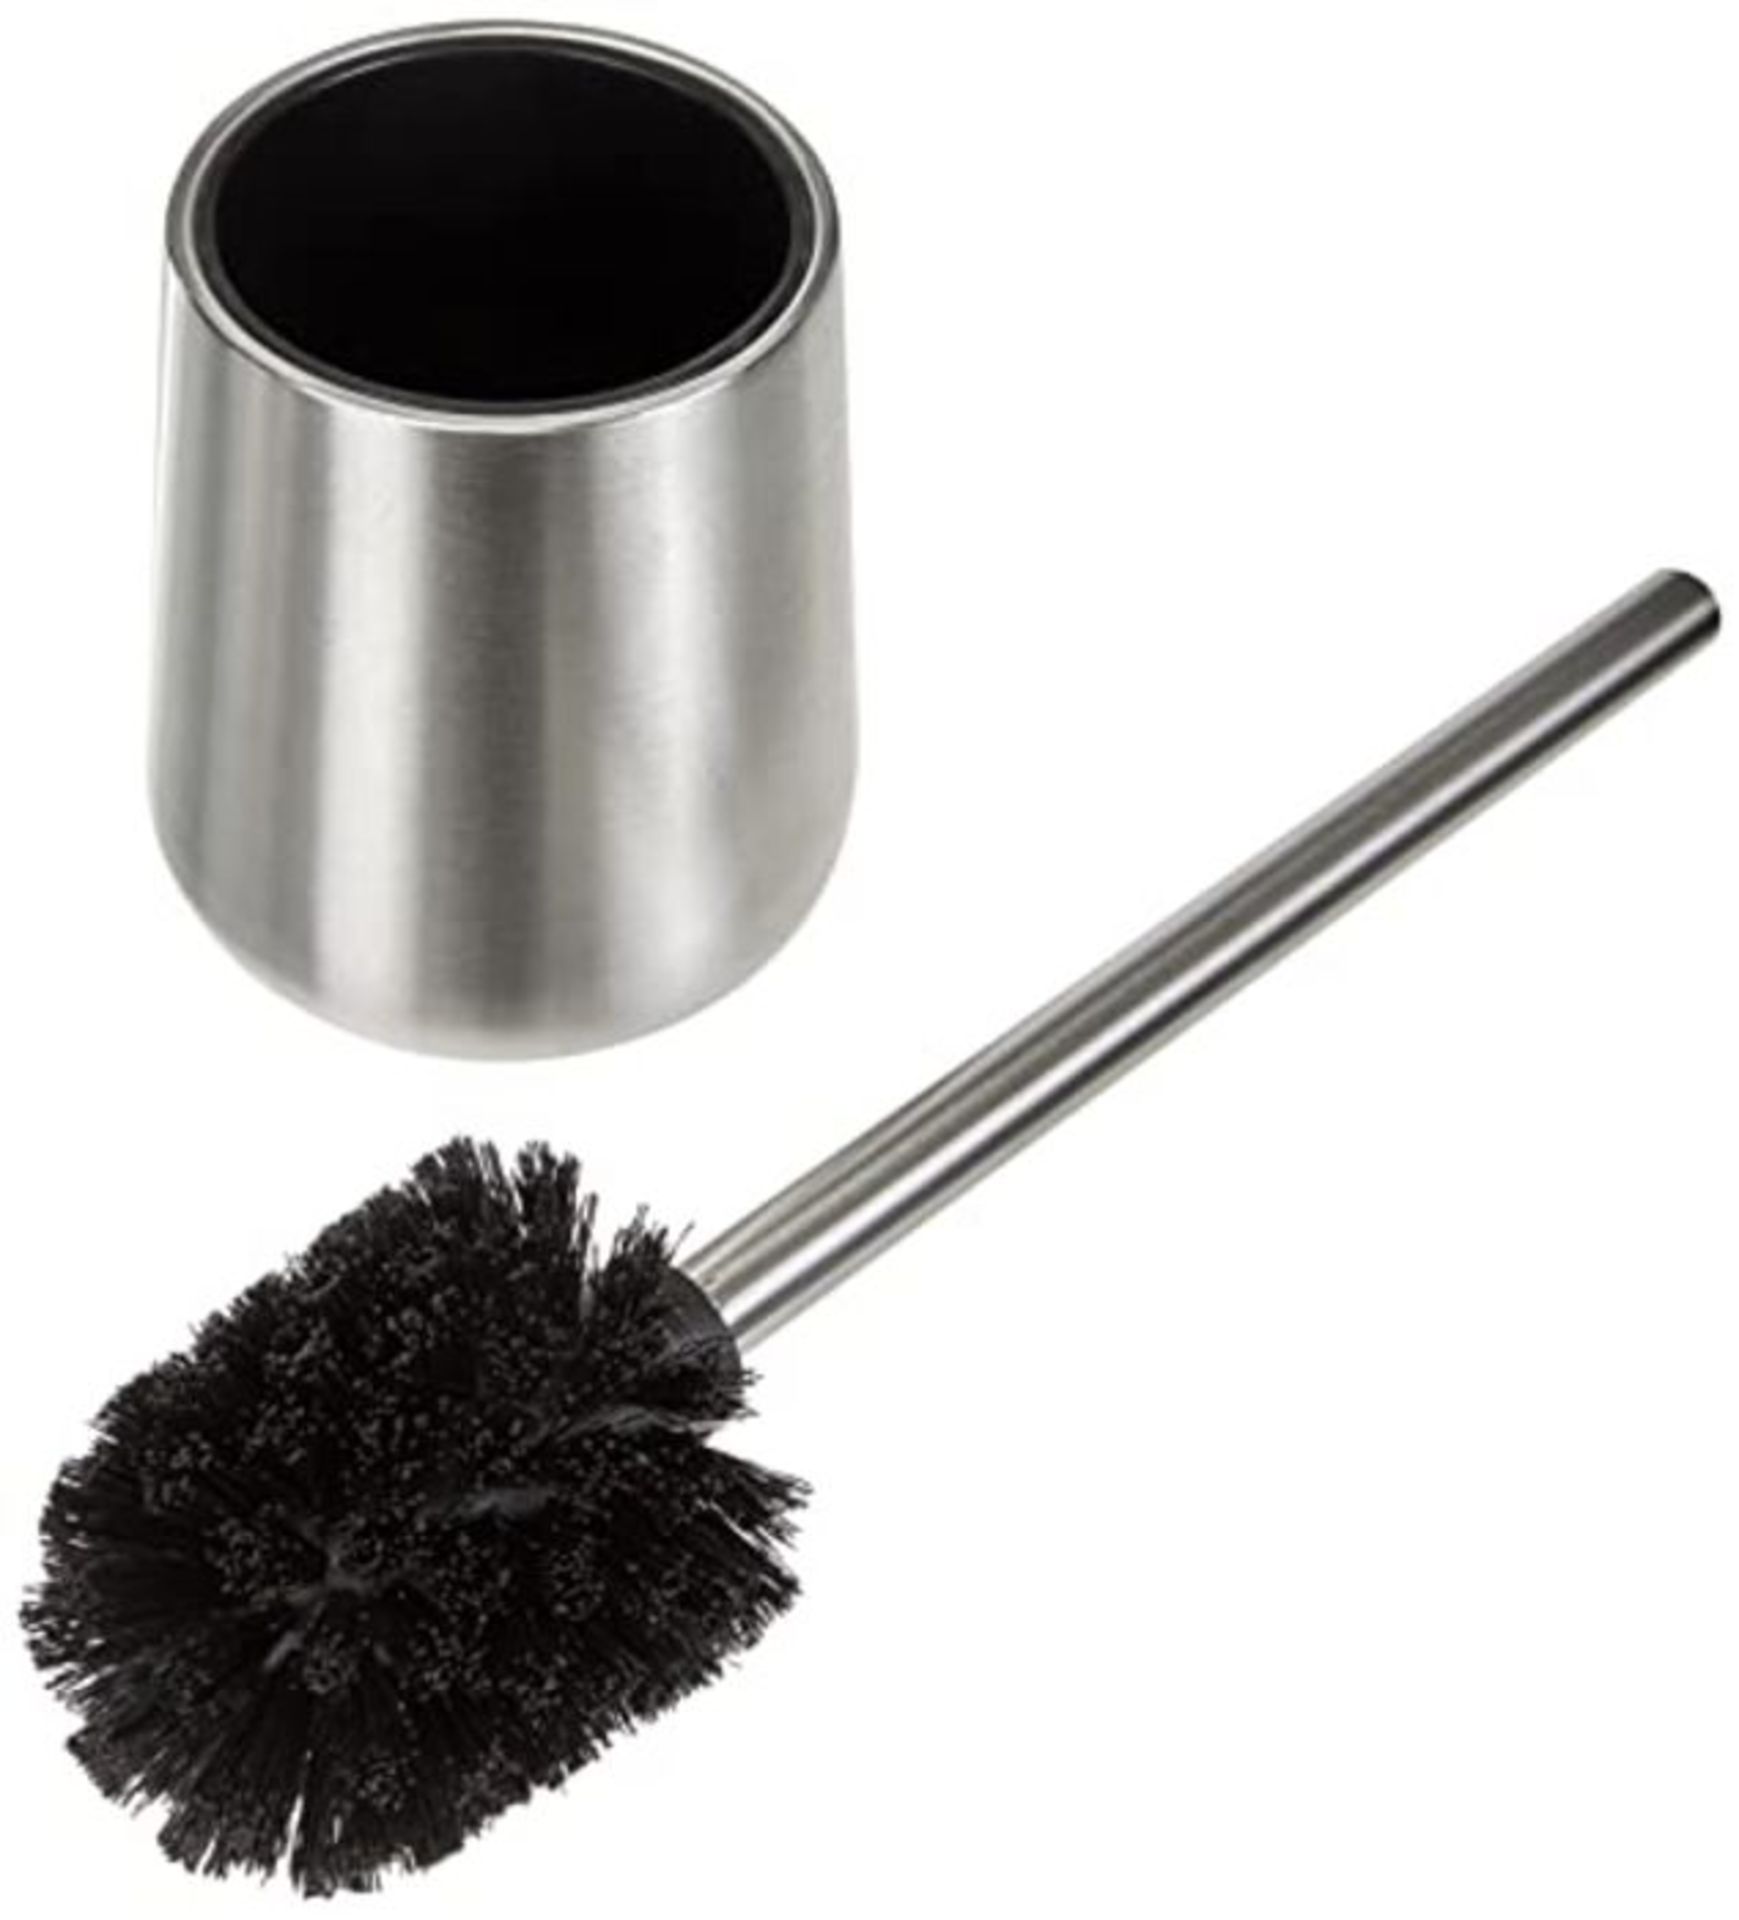 WENKO Solid-Toilet Brush Holder, Closed Shape, Stainless steel, Silver matt, 11 x 11 x